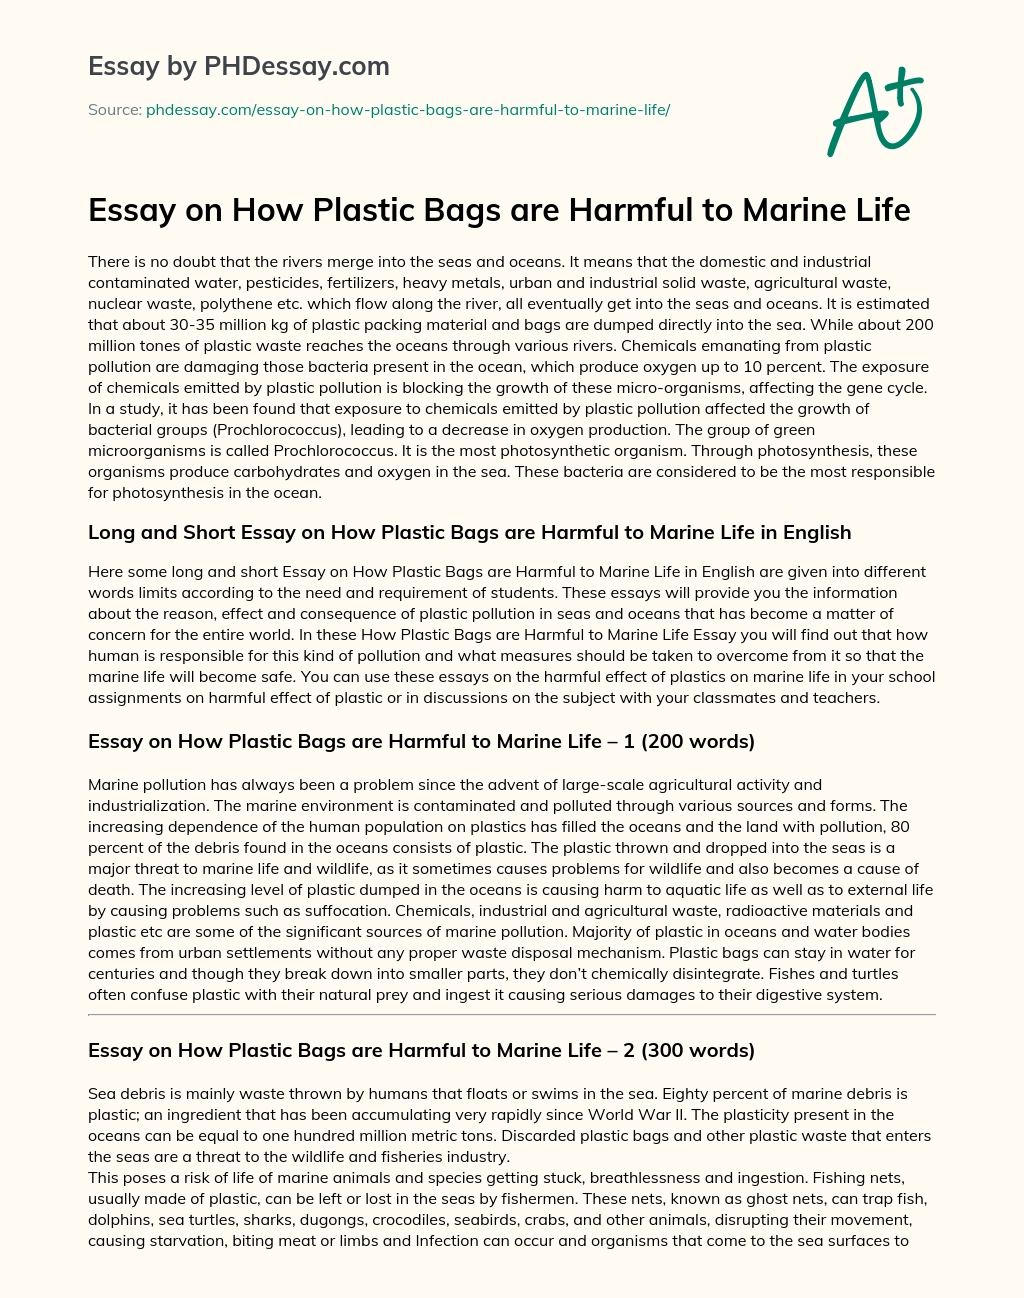 Essay on How Plastic Bags are Harmful to Marine Life essay